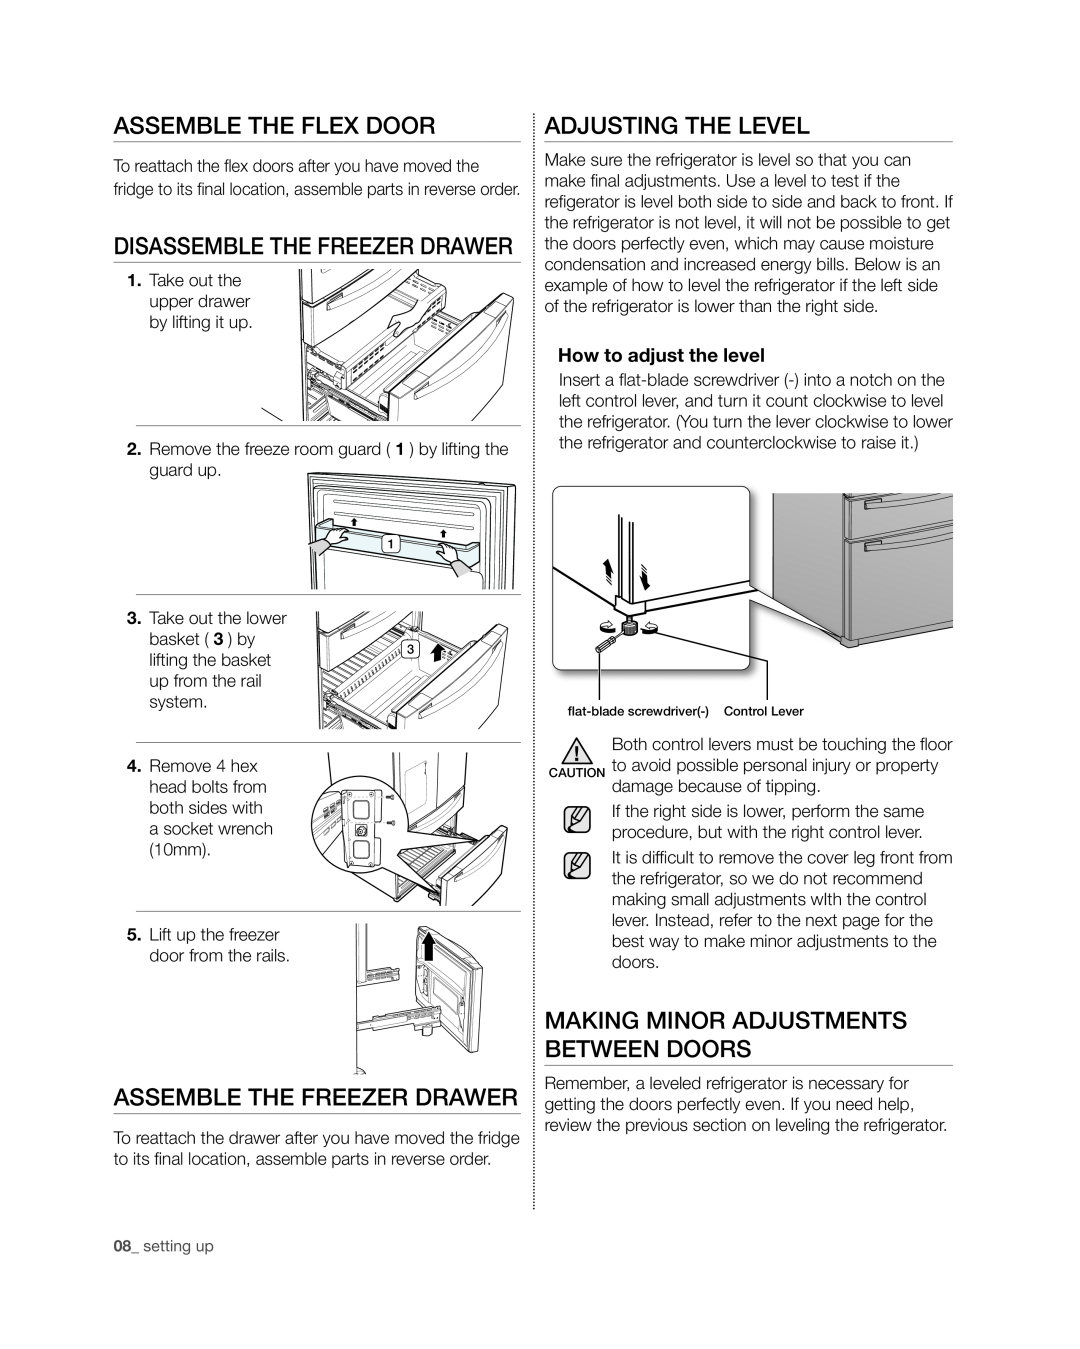 Samsung RF4267HA Assemble The Flex Door, Disassemble the freezer drawer, Adjusting the Level, Assemble the freezer drawer 